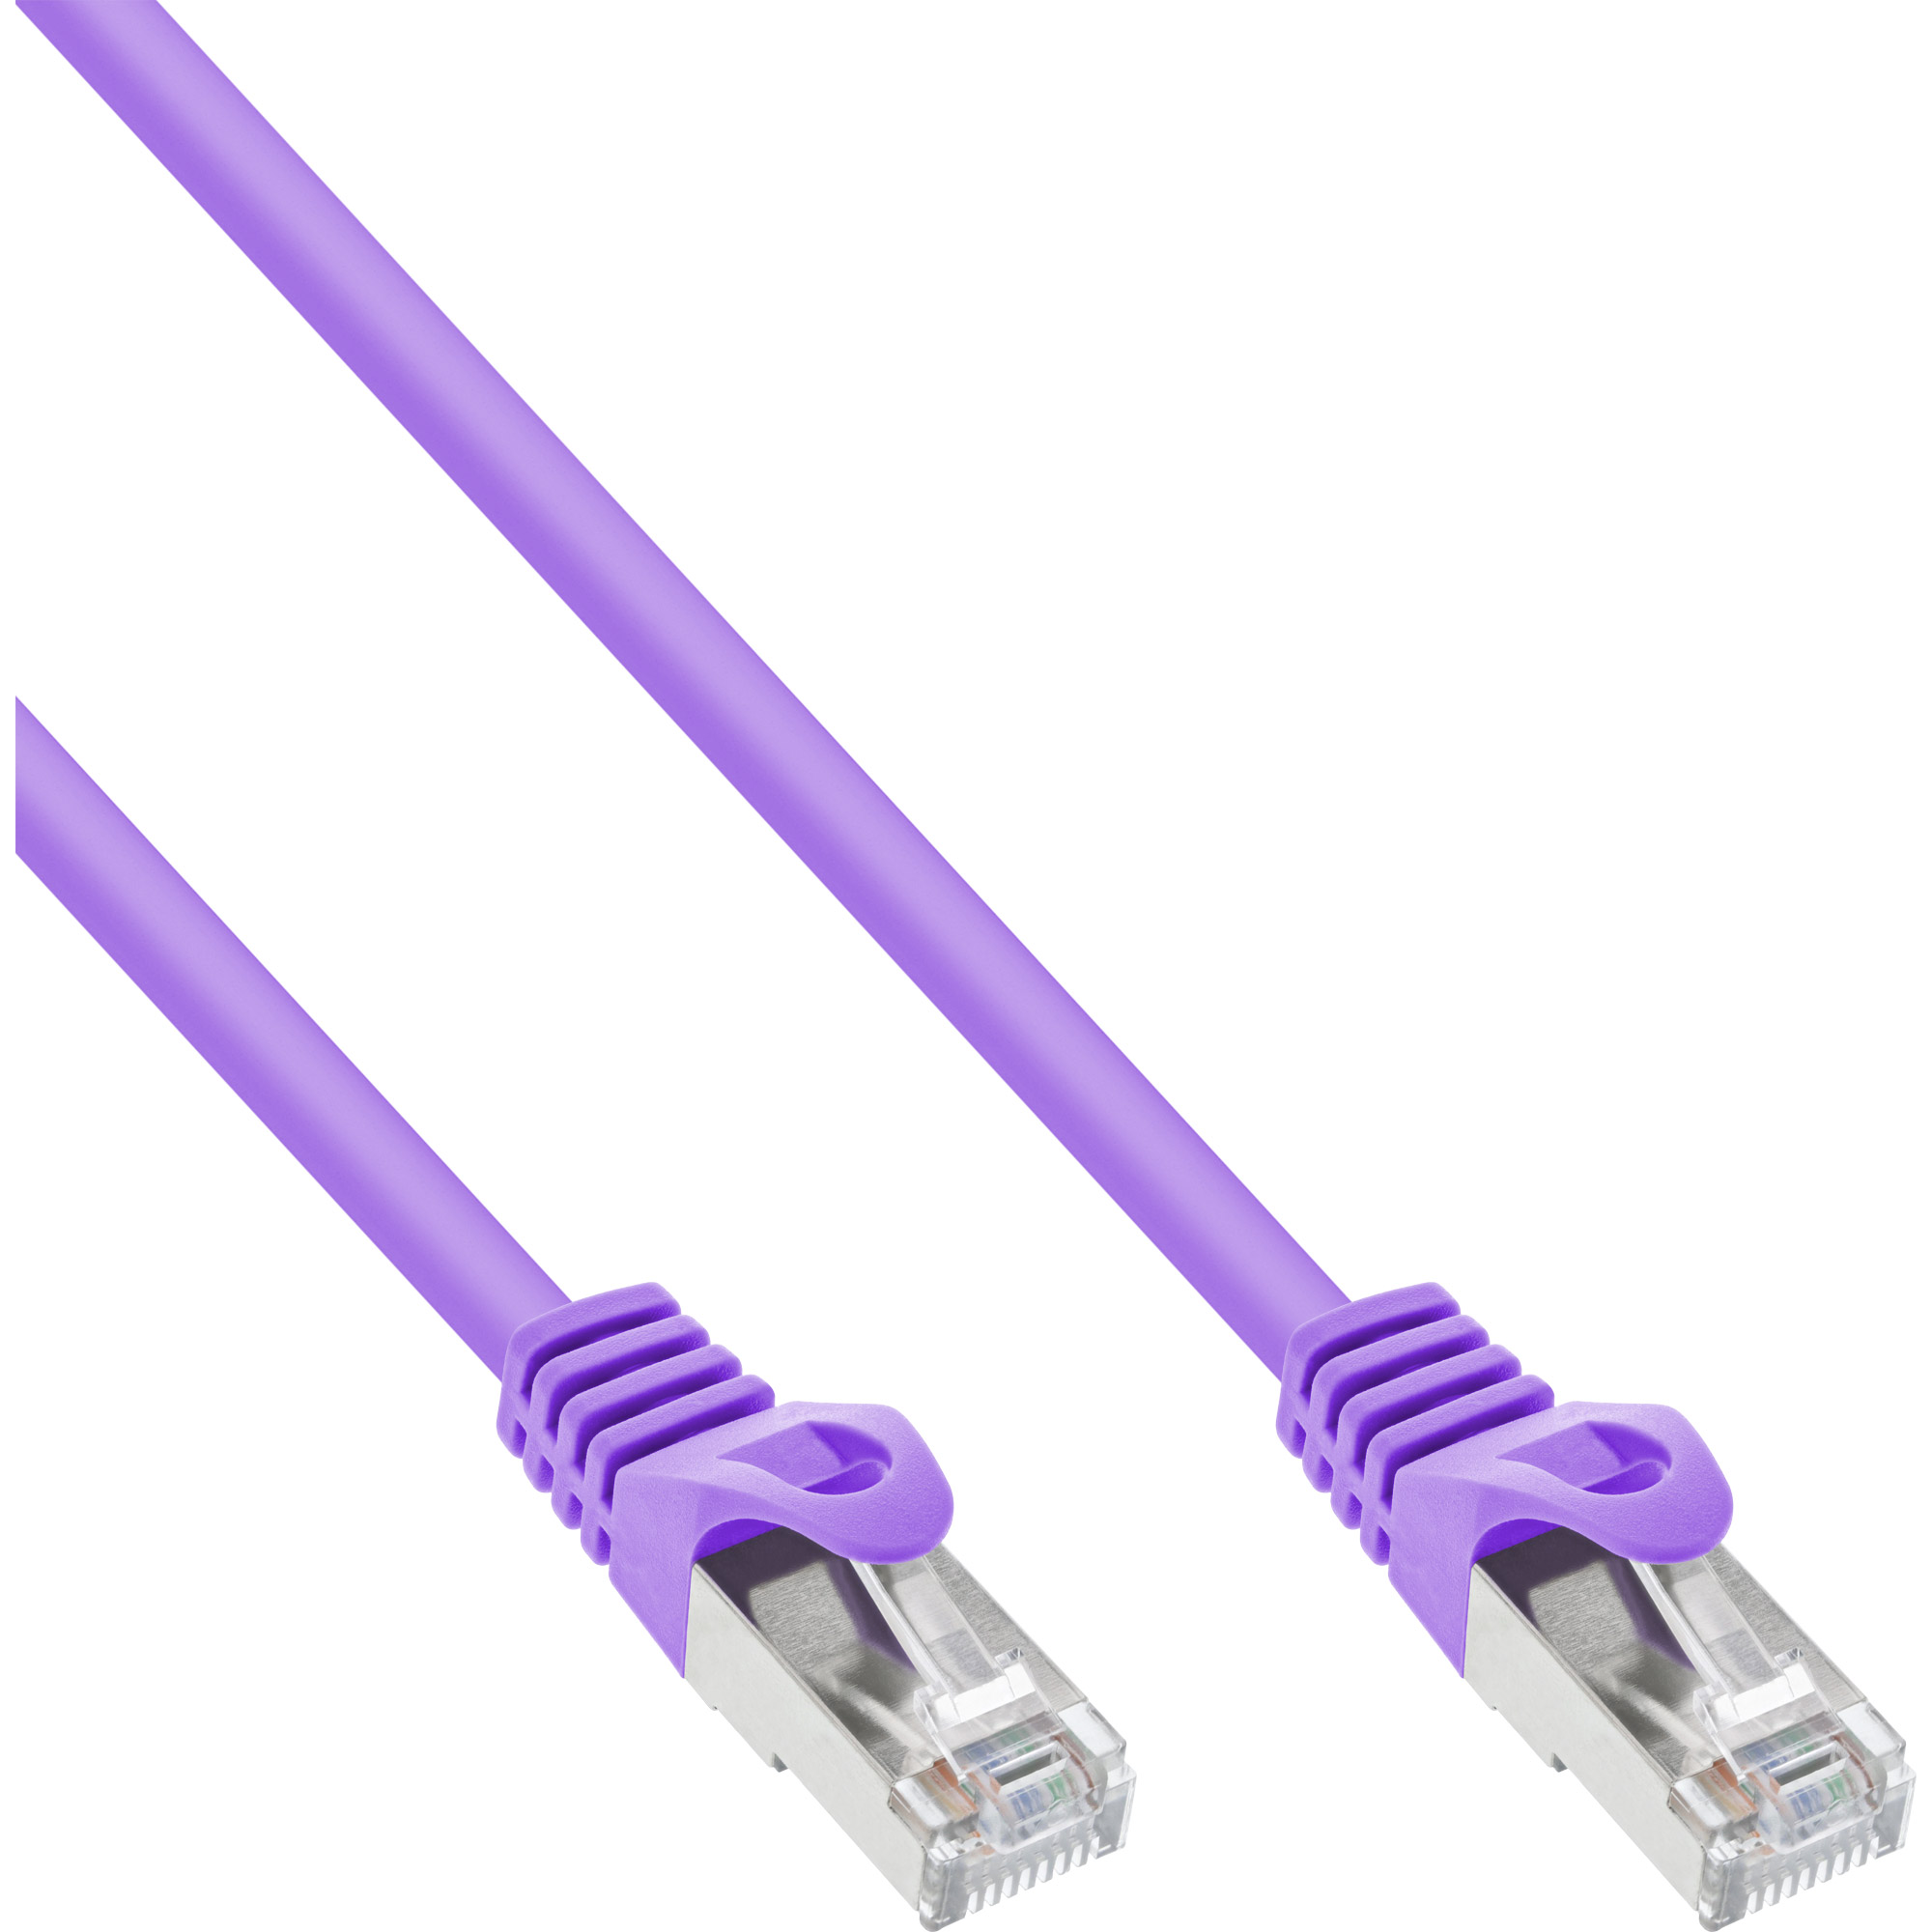 Patchkabel, INLINE InLine® 2 purple, SF/UTP, 2m Patchkabel, Kabel Patchkabel, Cat.5e, m